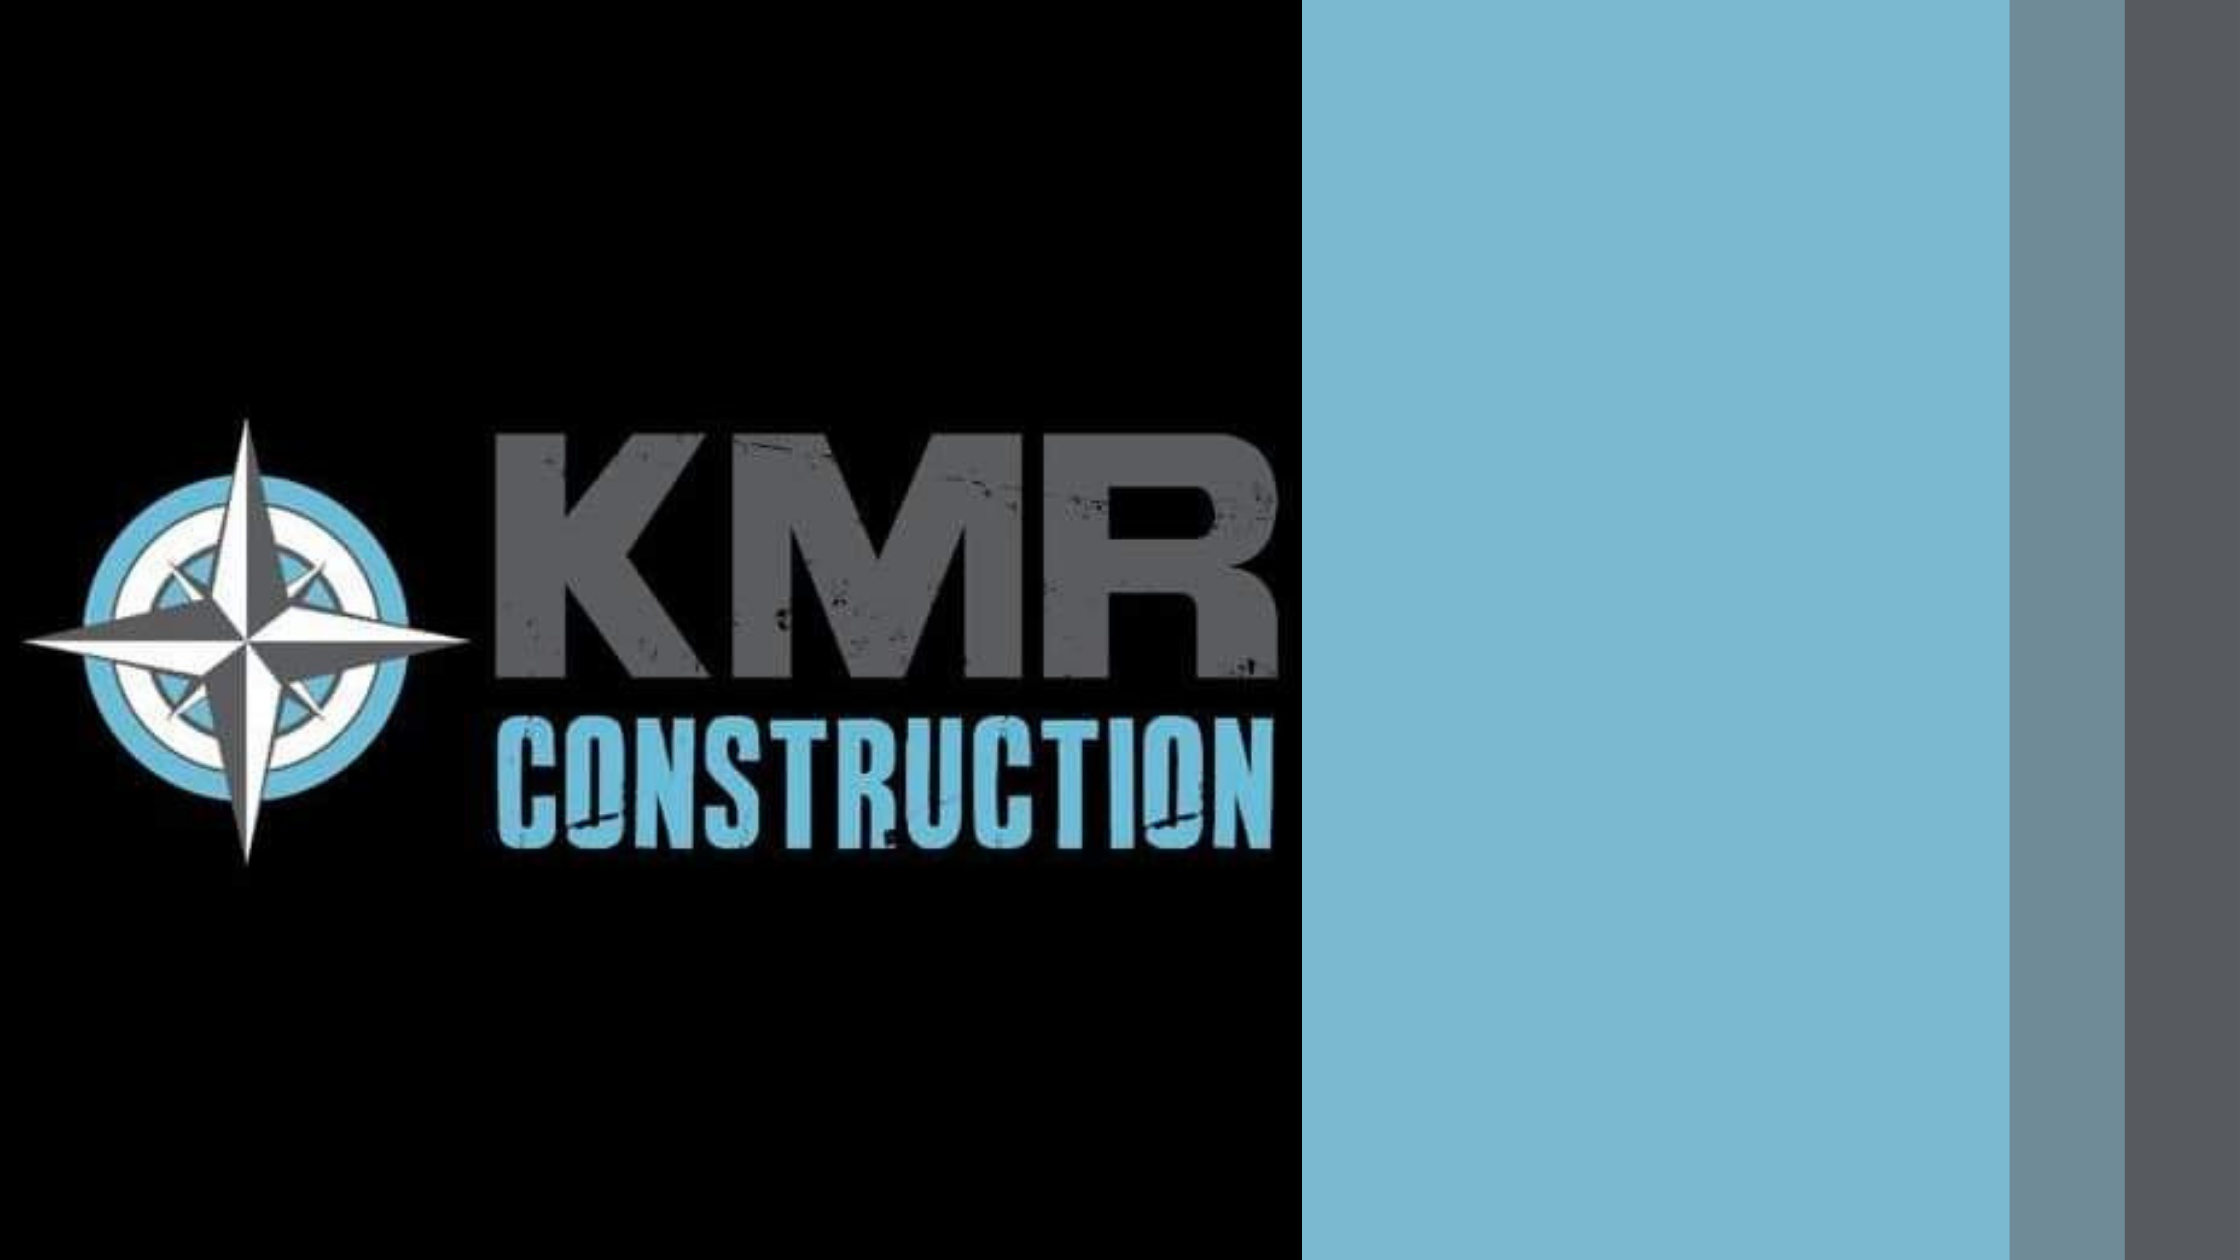 KMR Construction